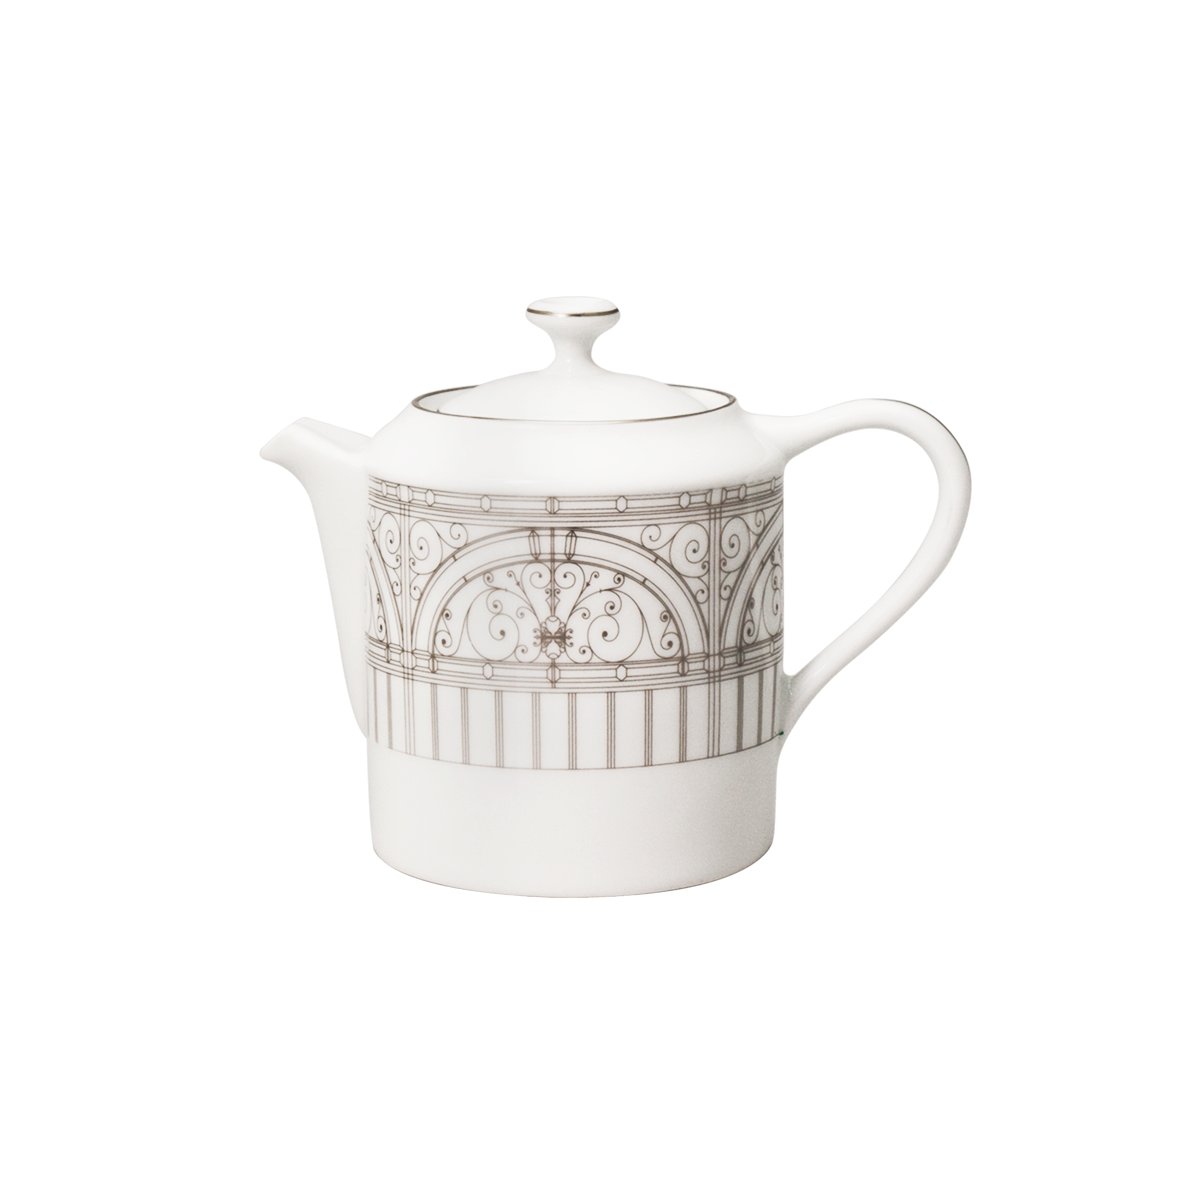 Belle Epoque Teapot